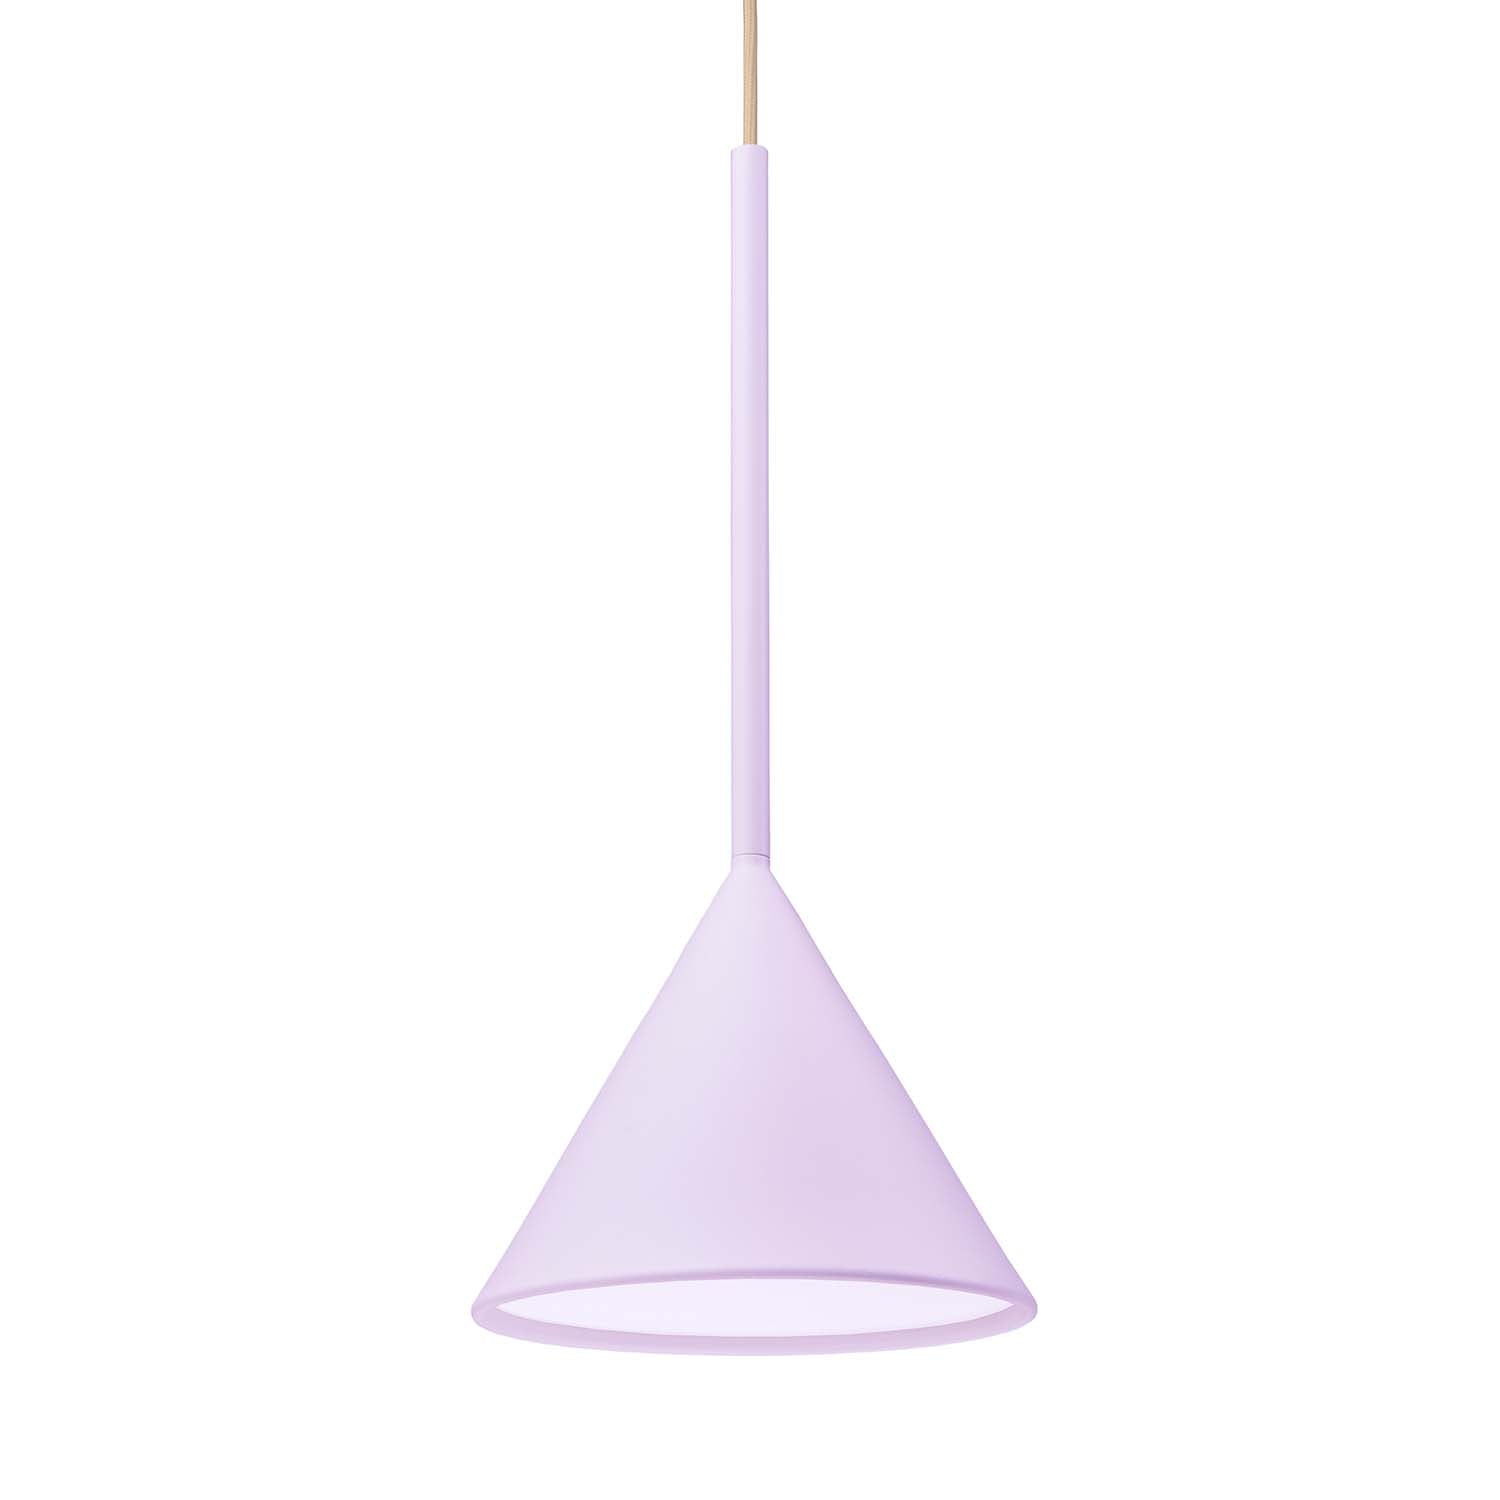 FIGURA CONE - Suspension conique colorée minimaliste design